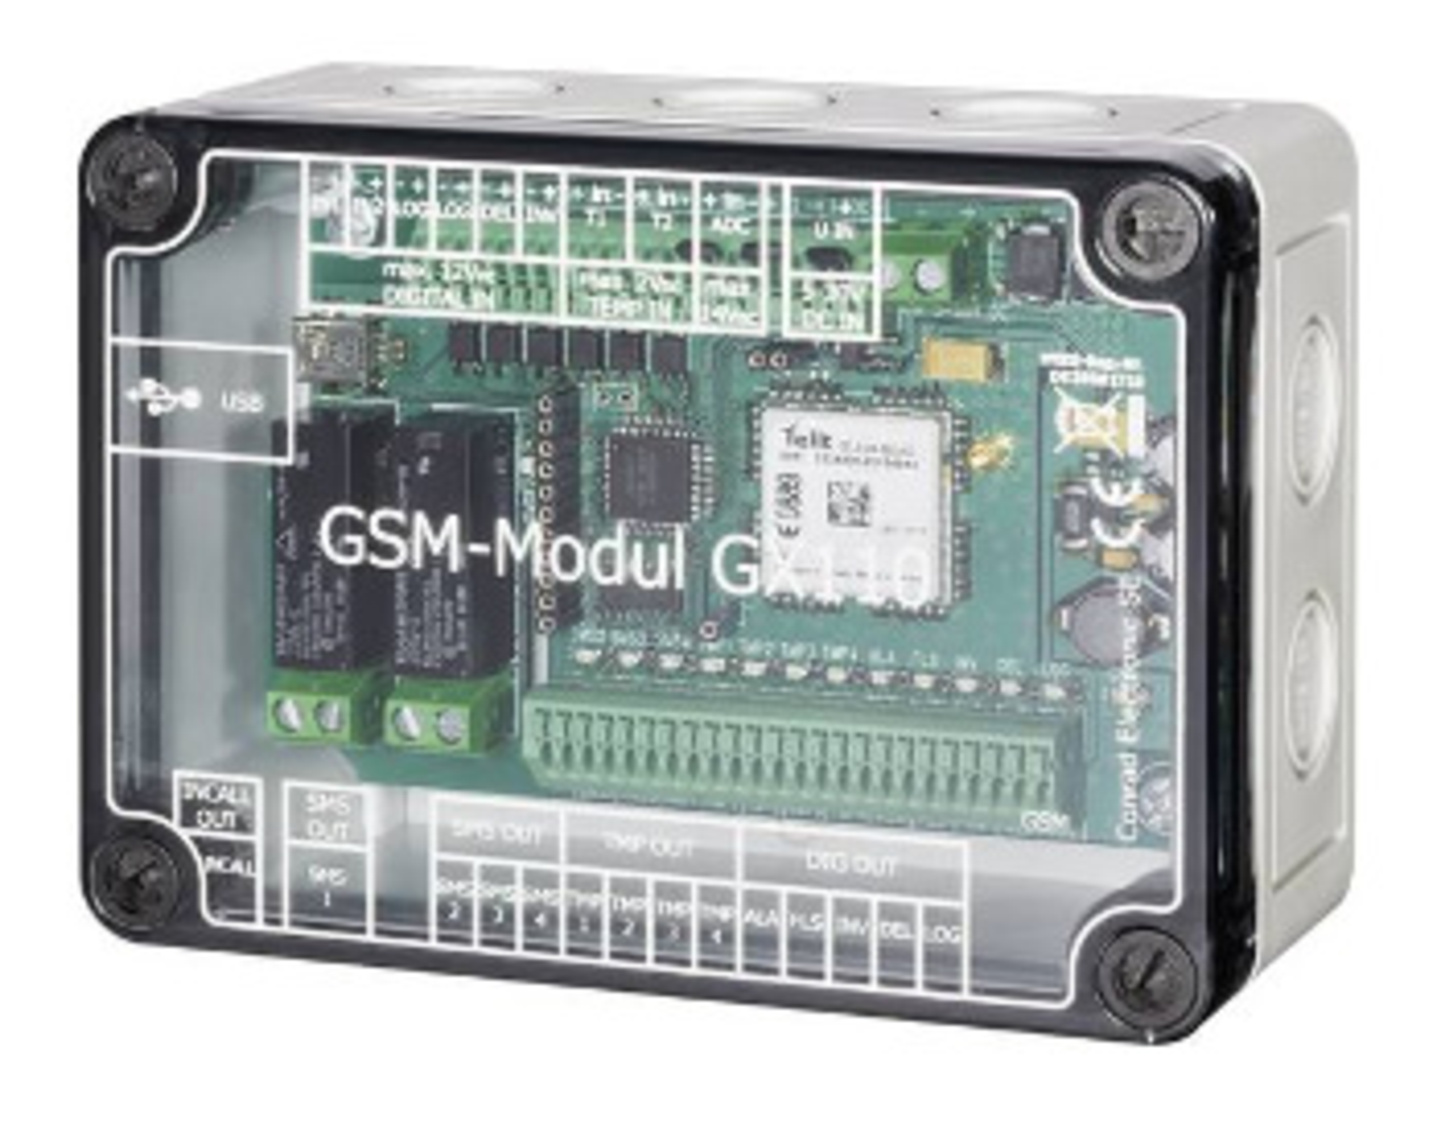 GSM-Modul GX110